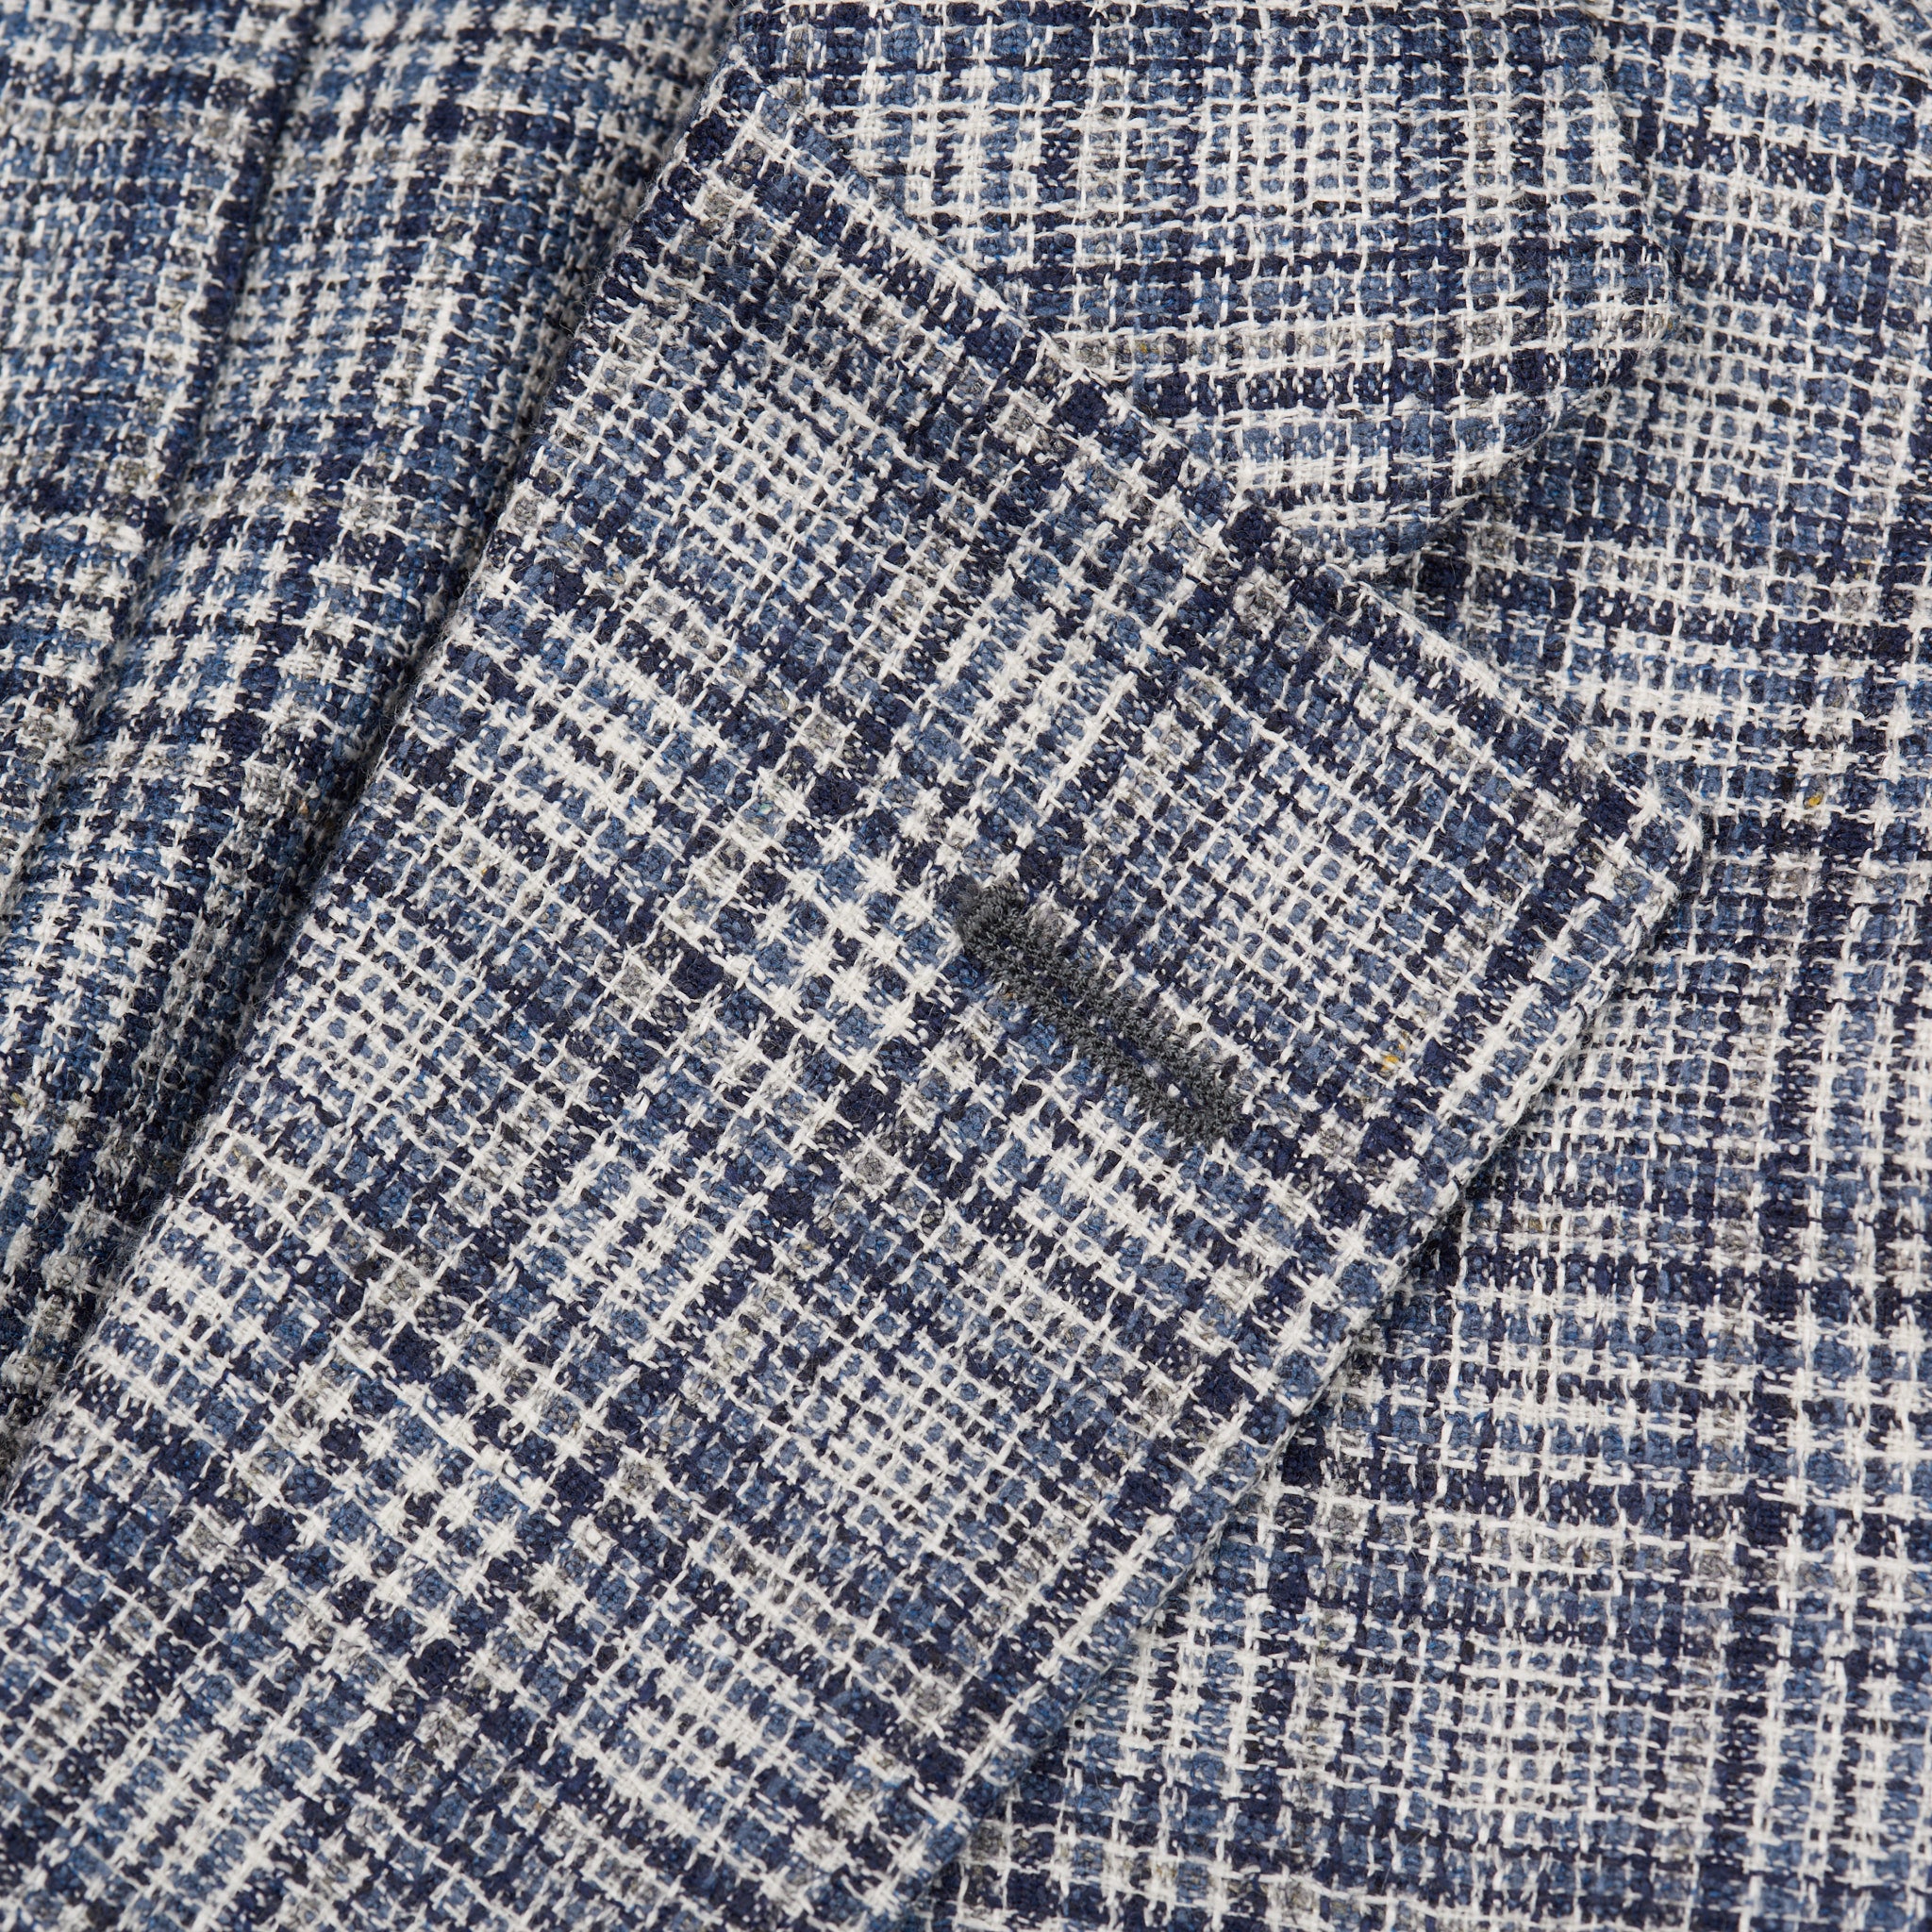 BOGLIOLI Milano "K. Jacket" Blue Plaid Silk-Linen-Wool Unlined Jacket 48 NEW US 38 BOGLIOLI